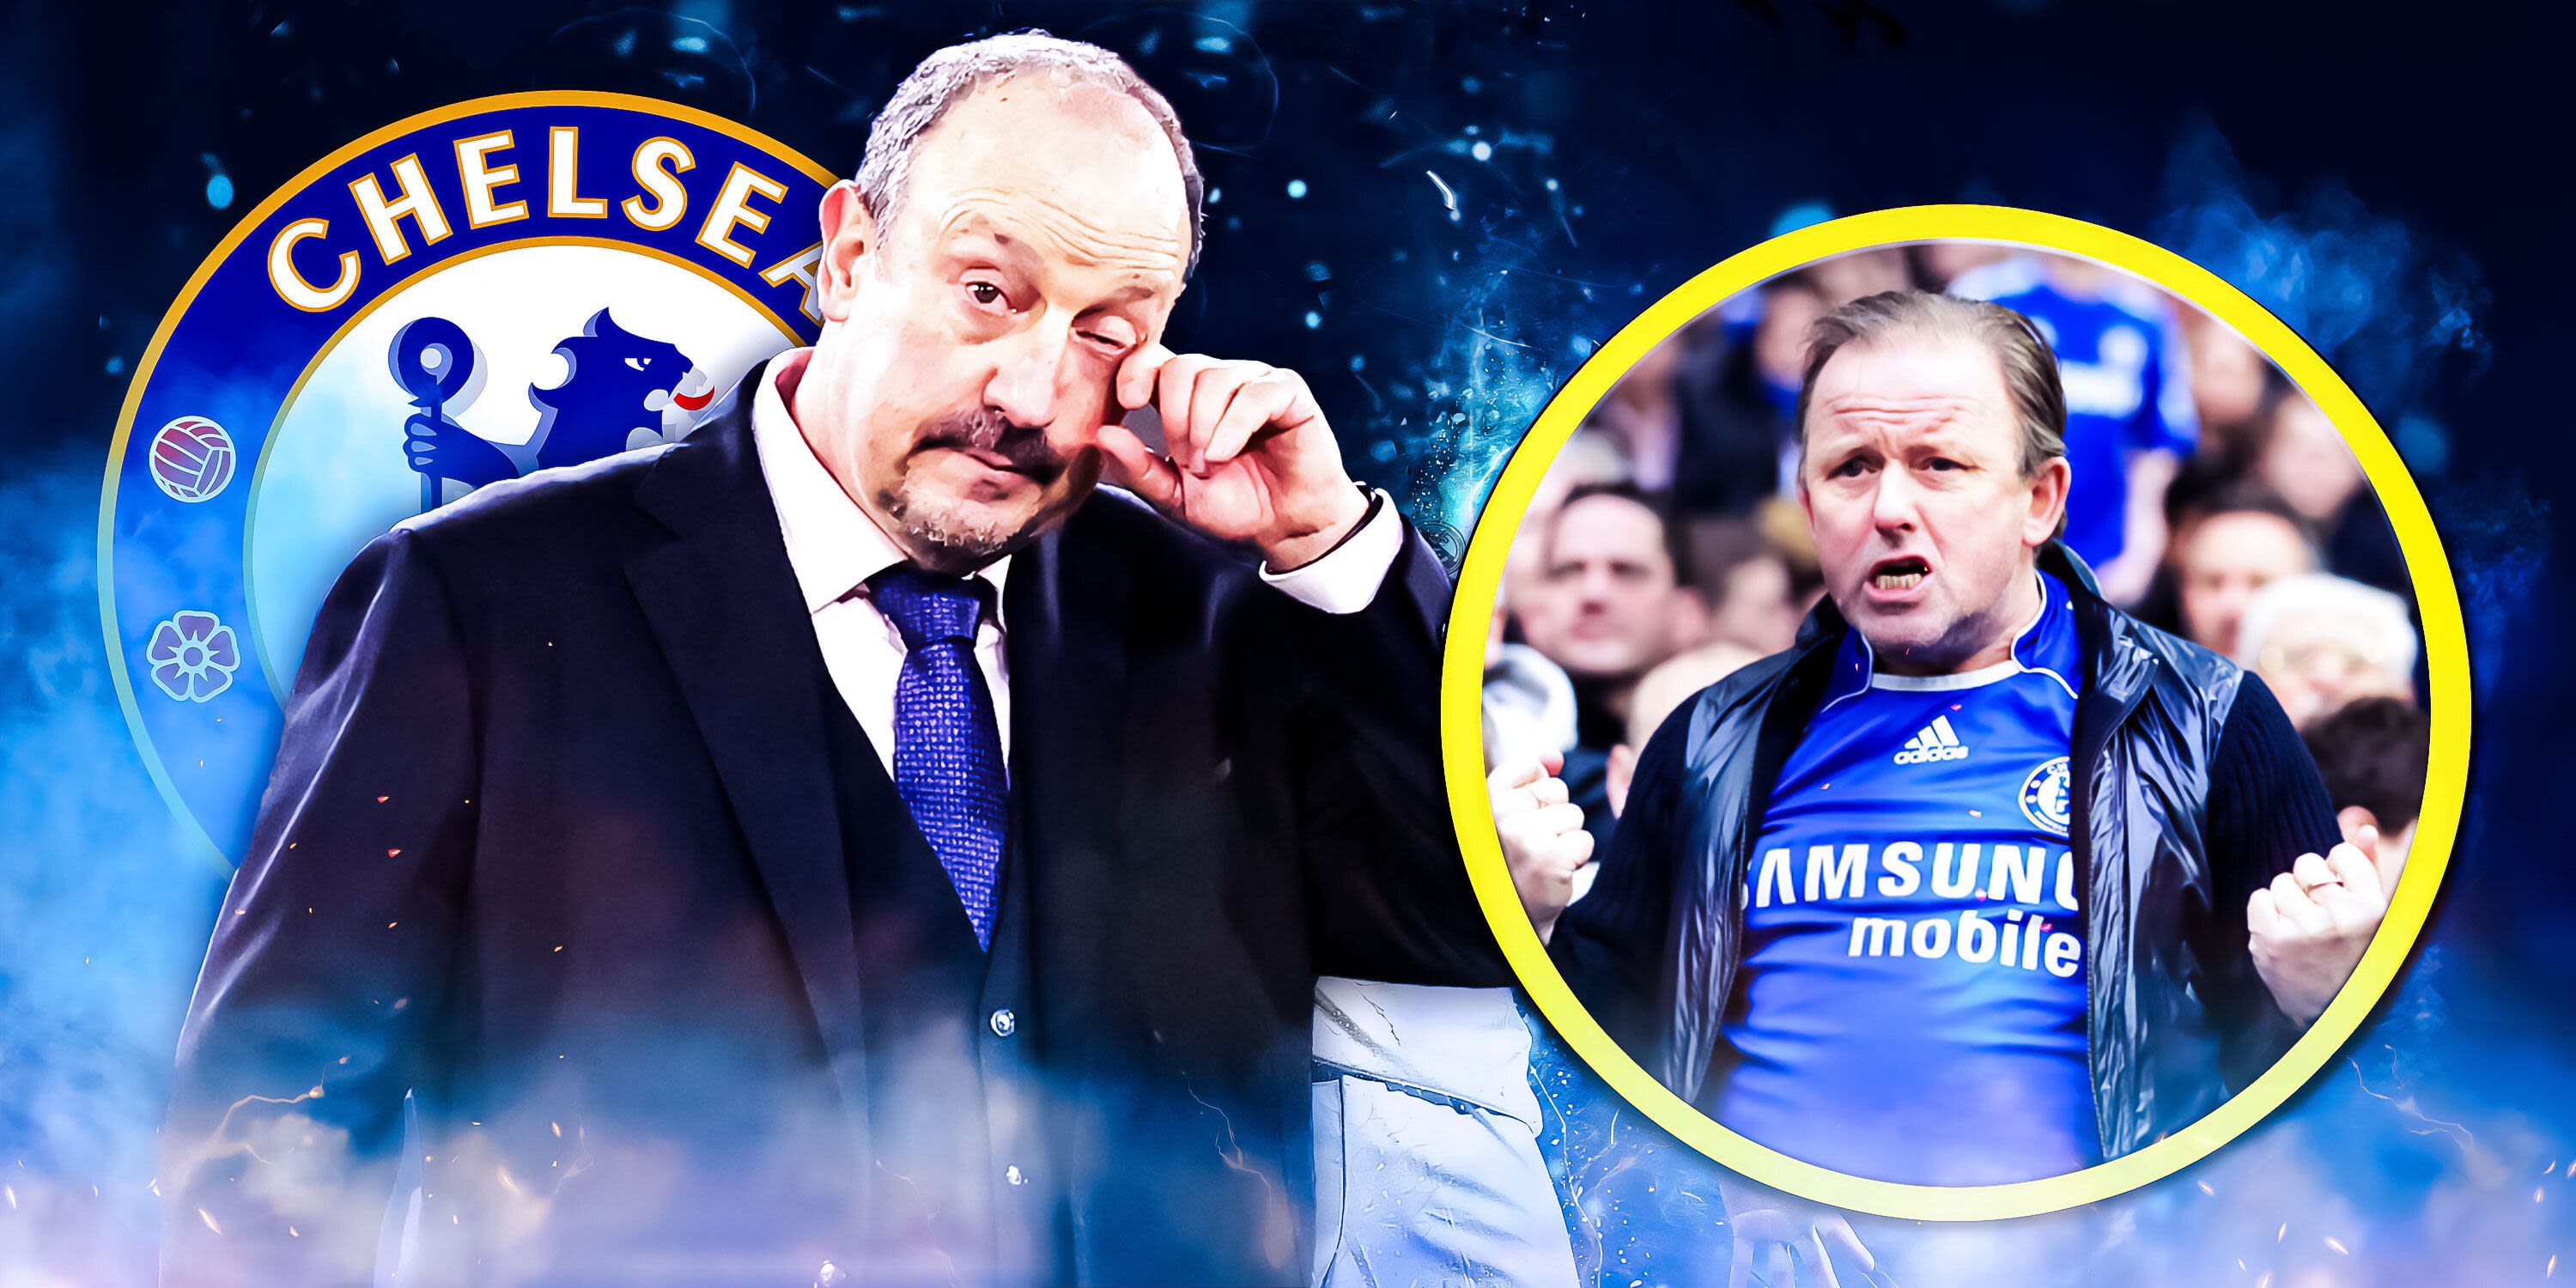 Listing the 5 reasons why Chelsea Fans hate Rafa Benitez